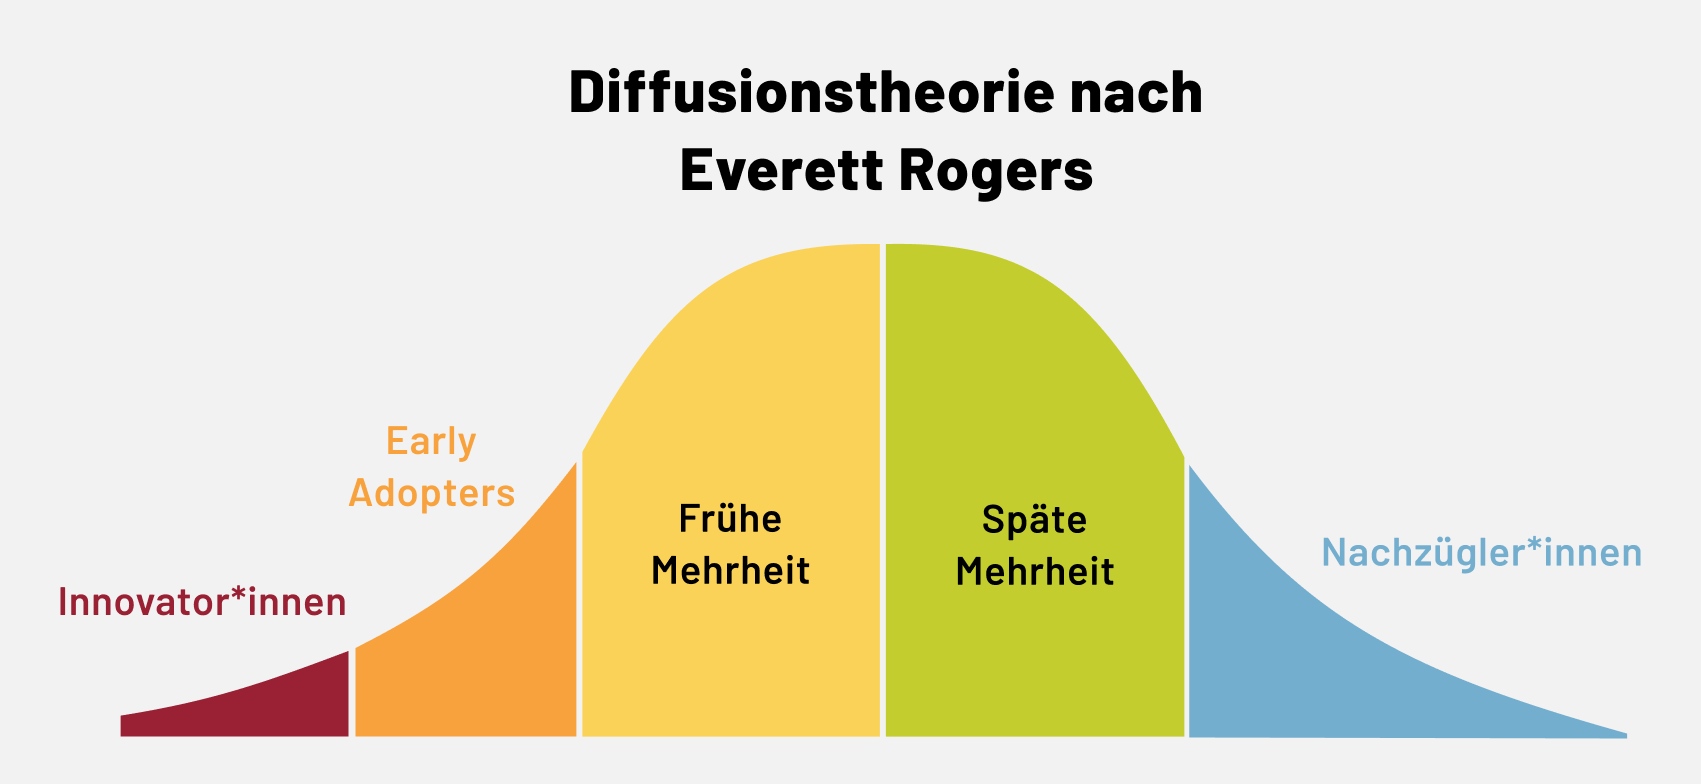 Diffusionstheorie nach Everett Rogers